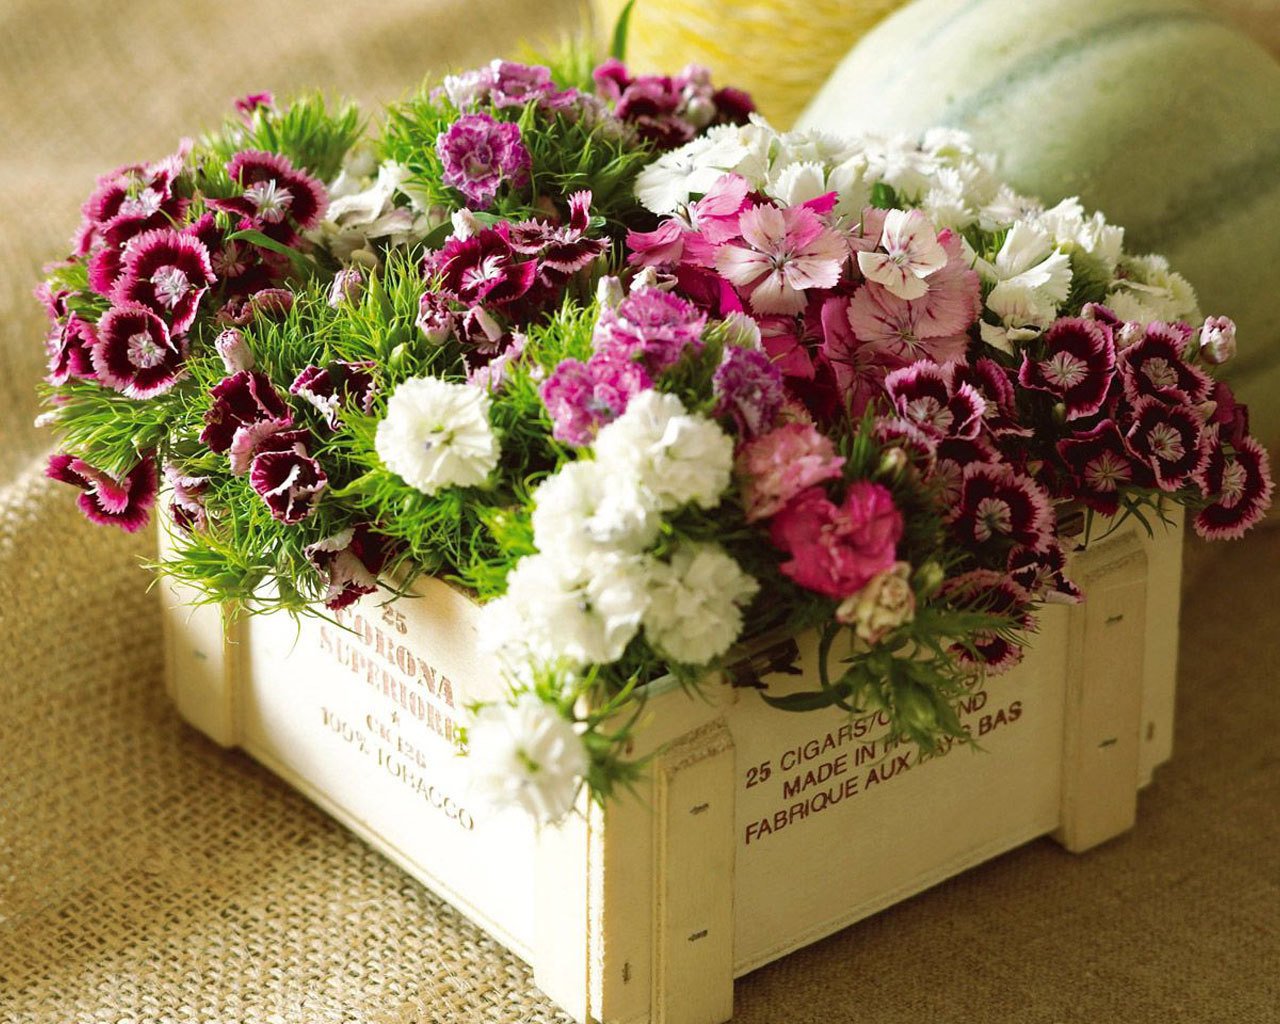 http://2.bp.blogspot.com/_Qu-KxwZh9G4/TBuwMqCWS0I/AAAAAAAATyg/jZ_cHm8-wow/s1600/Flowers-in-box-wallpaper_1280x1024.jpg